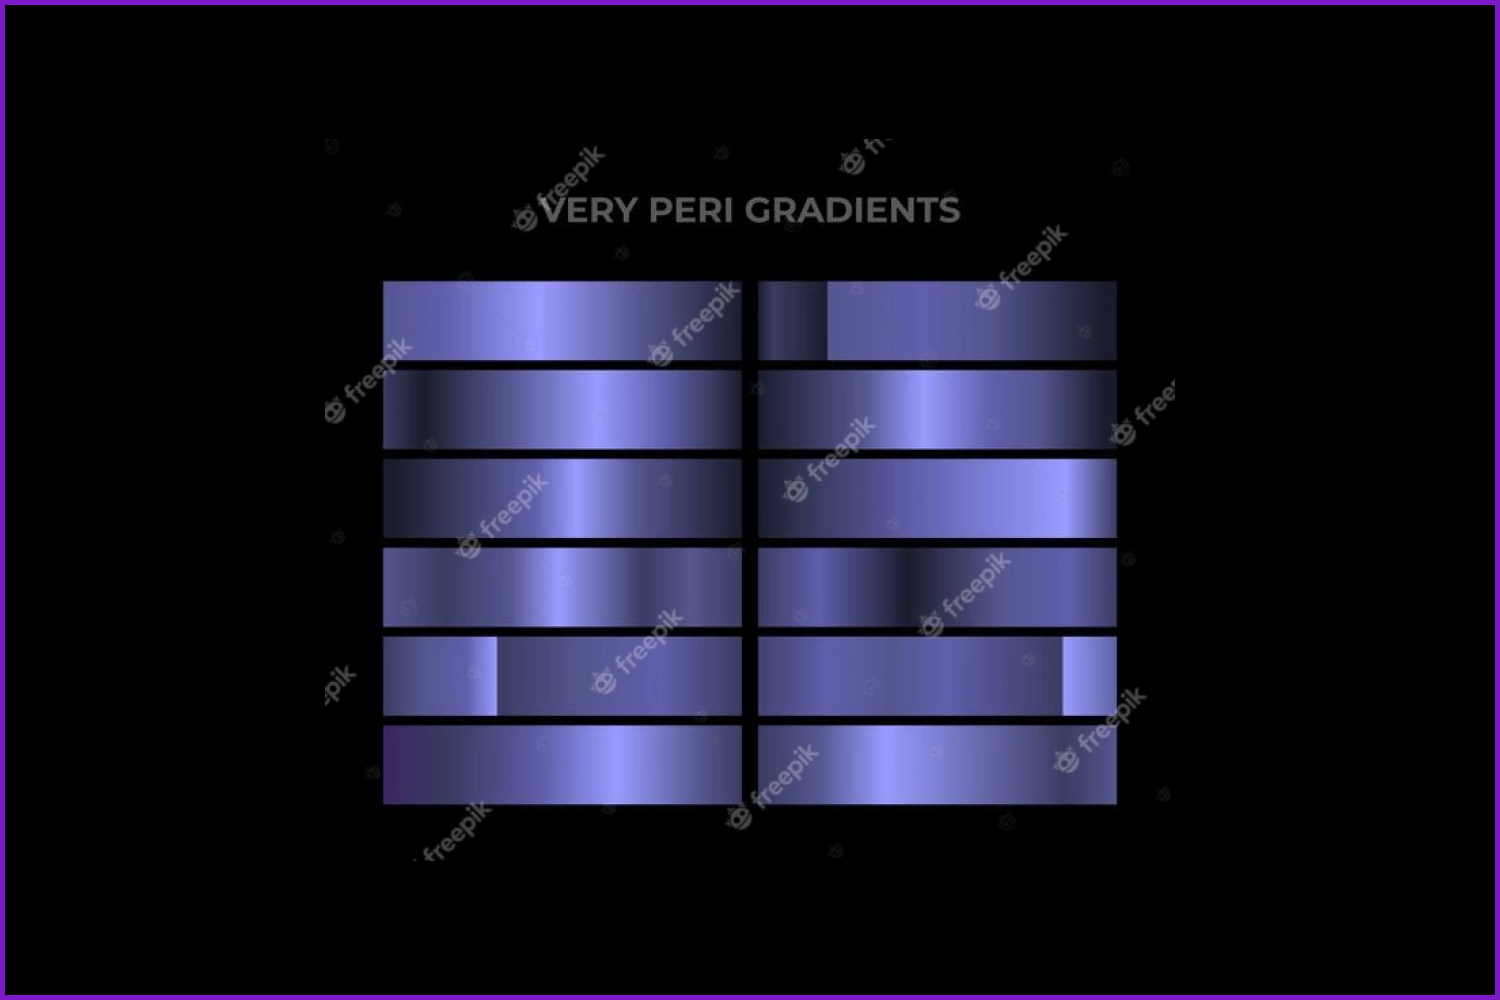 Very peri gradients.